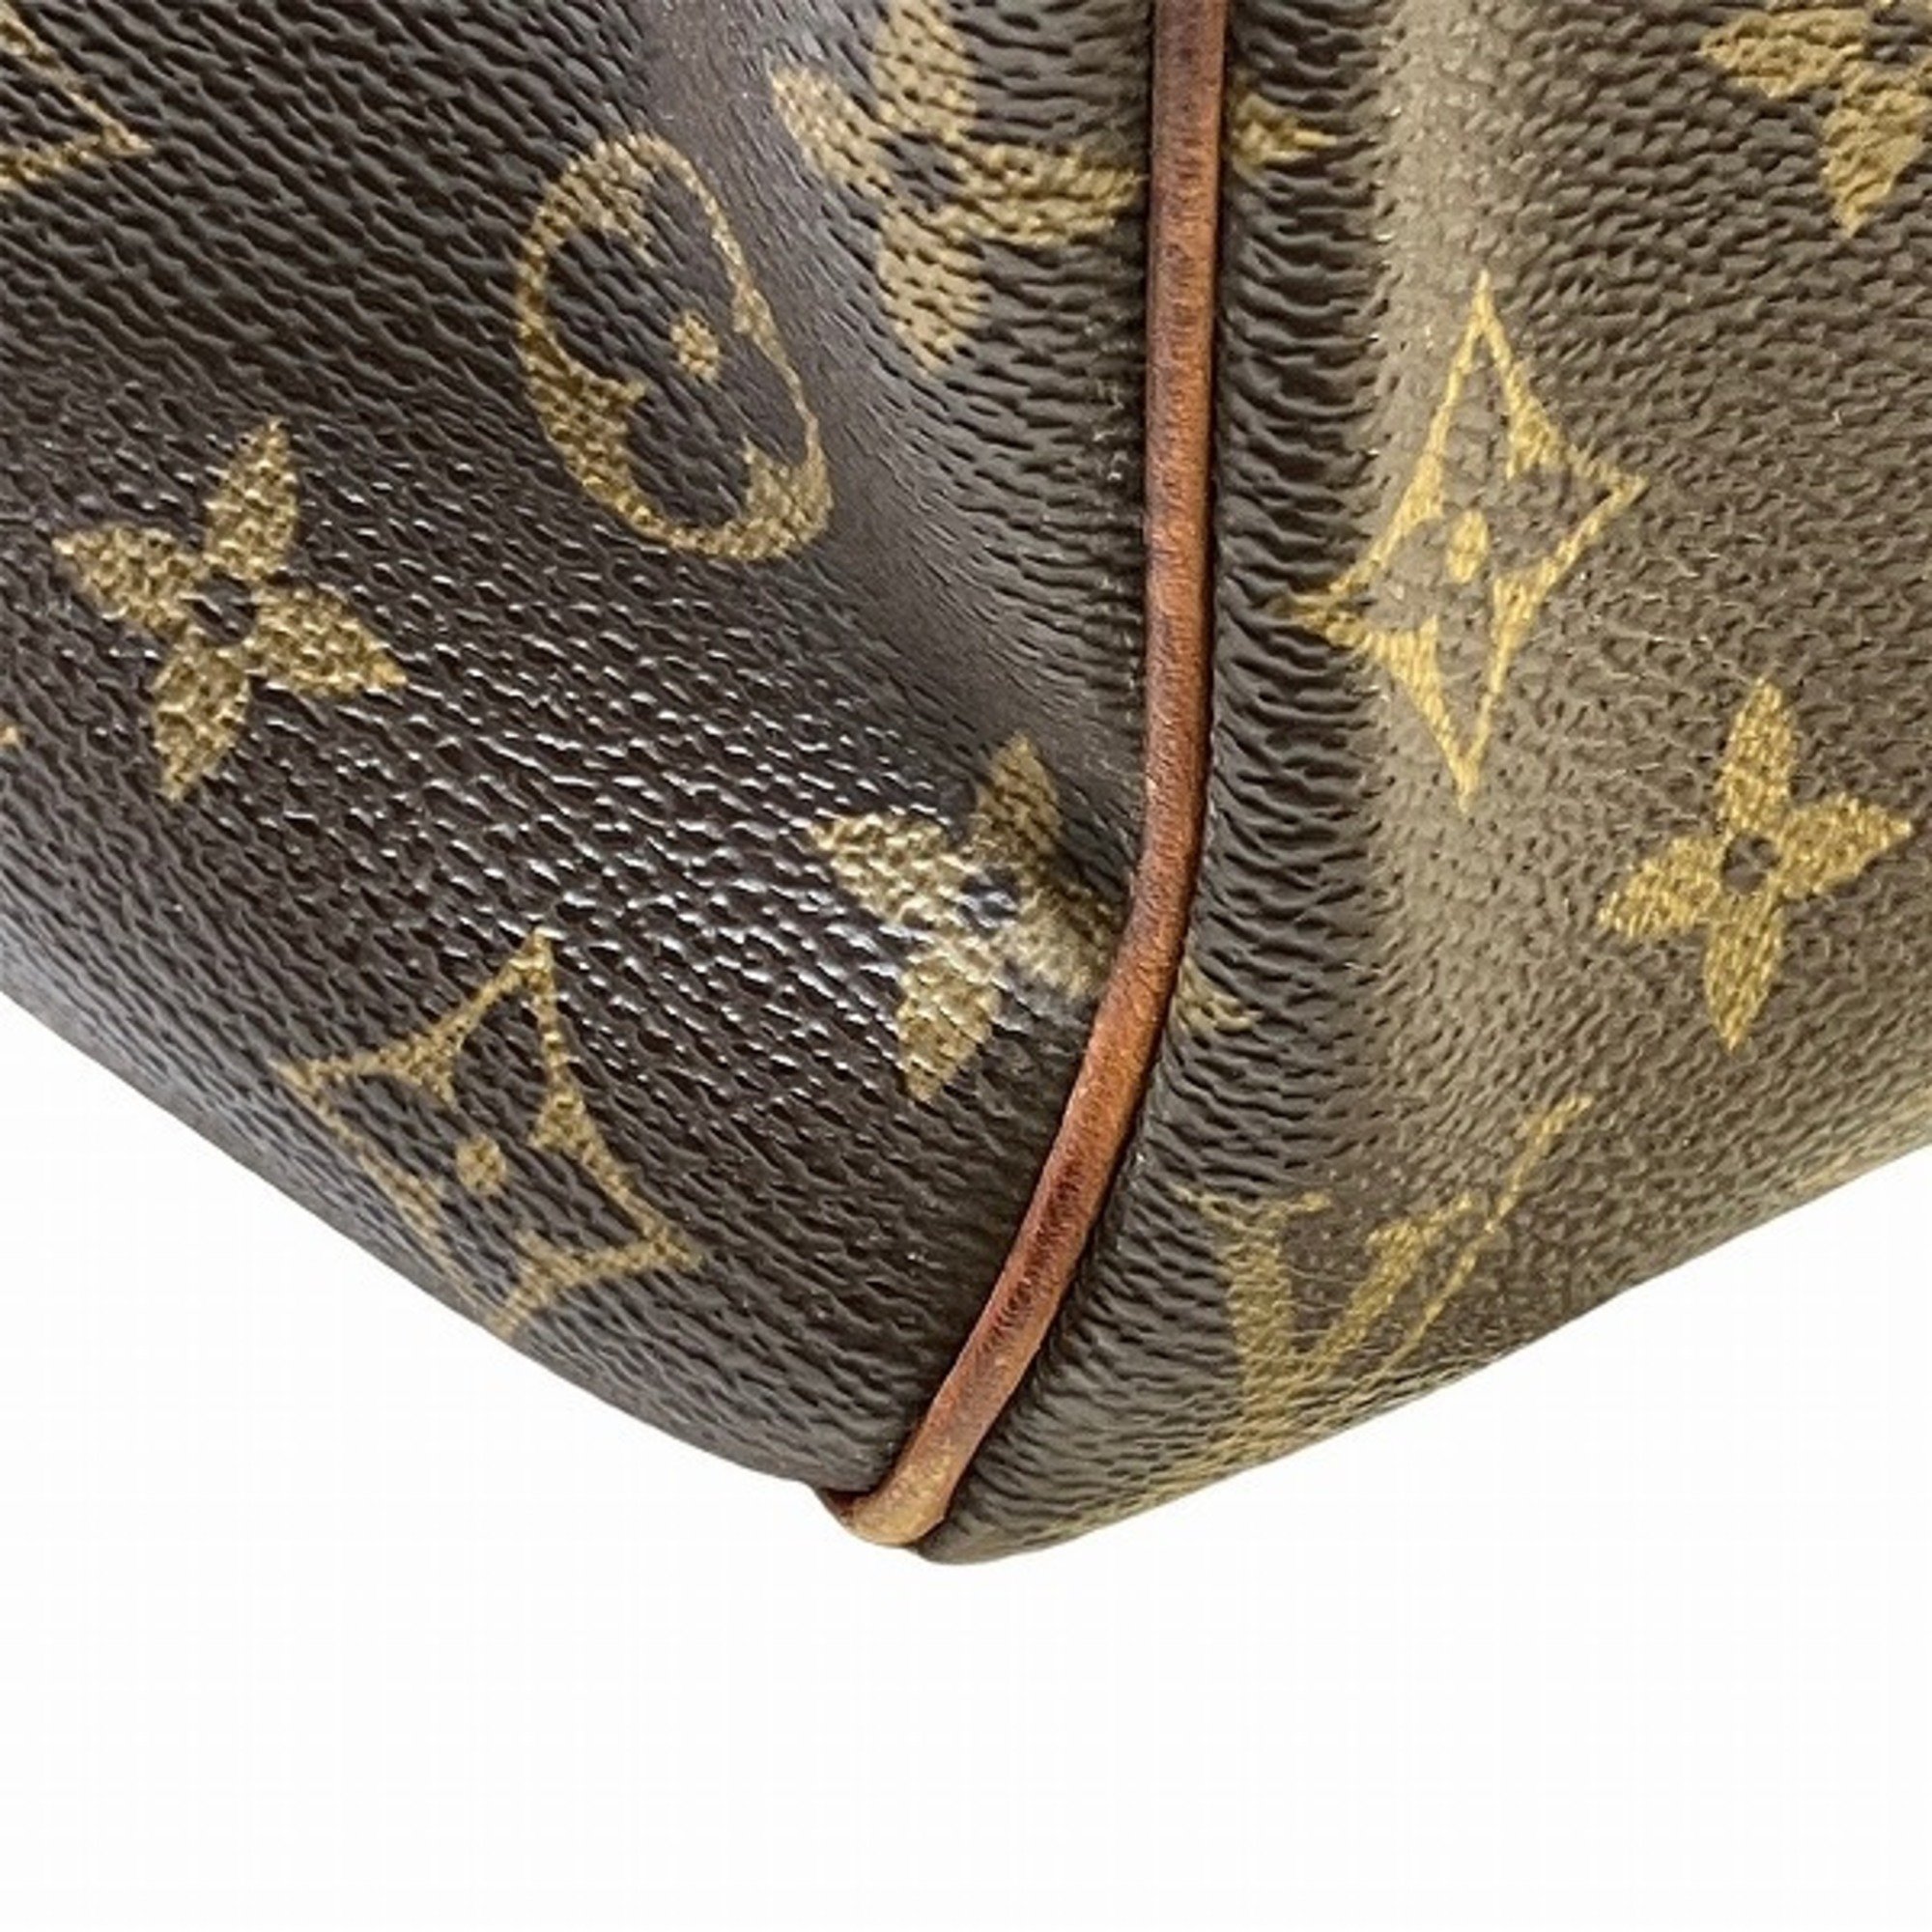 Louis Vuitton Monogram City GM M51181 Bag Shoulder Handbag Ladies